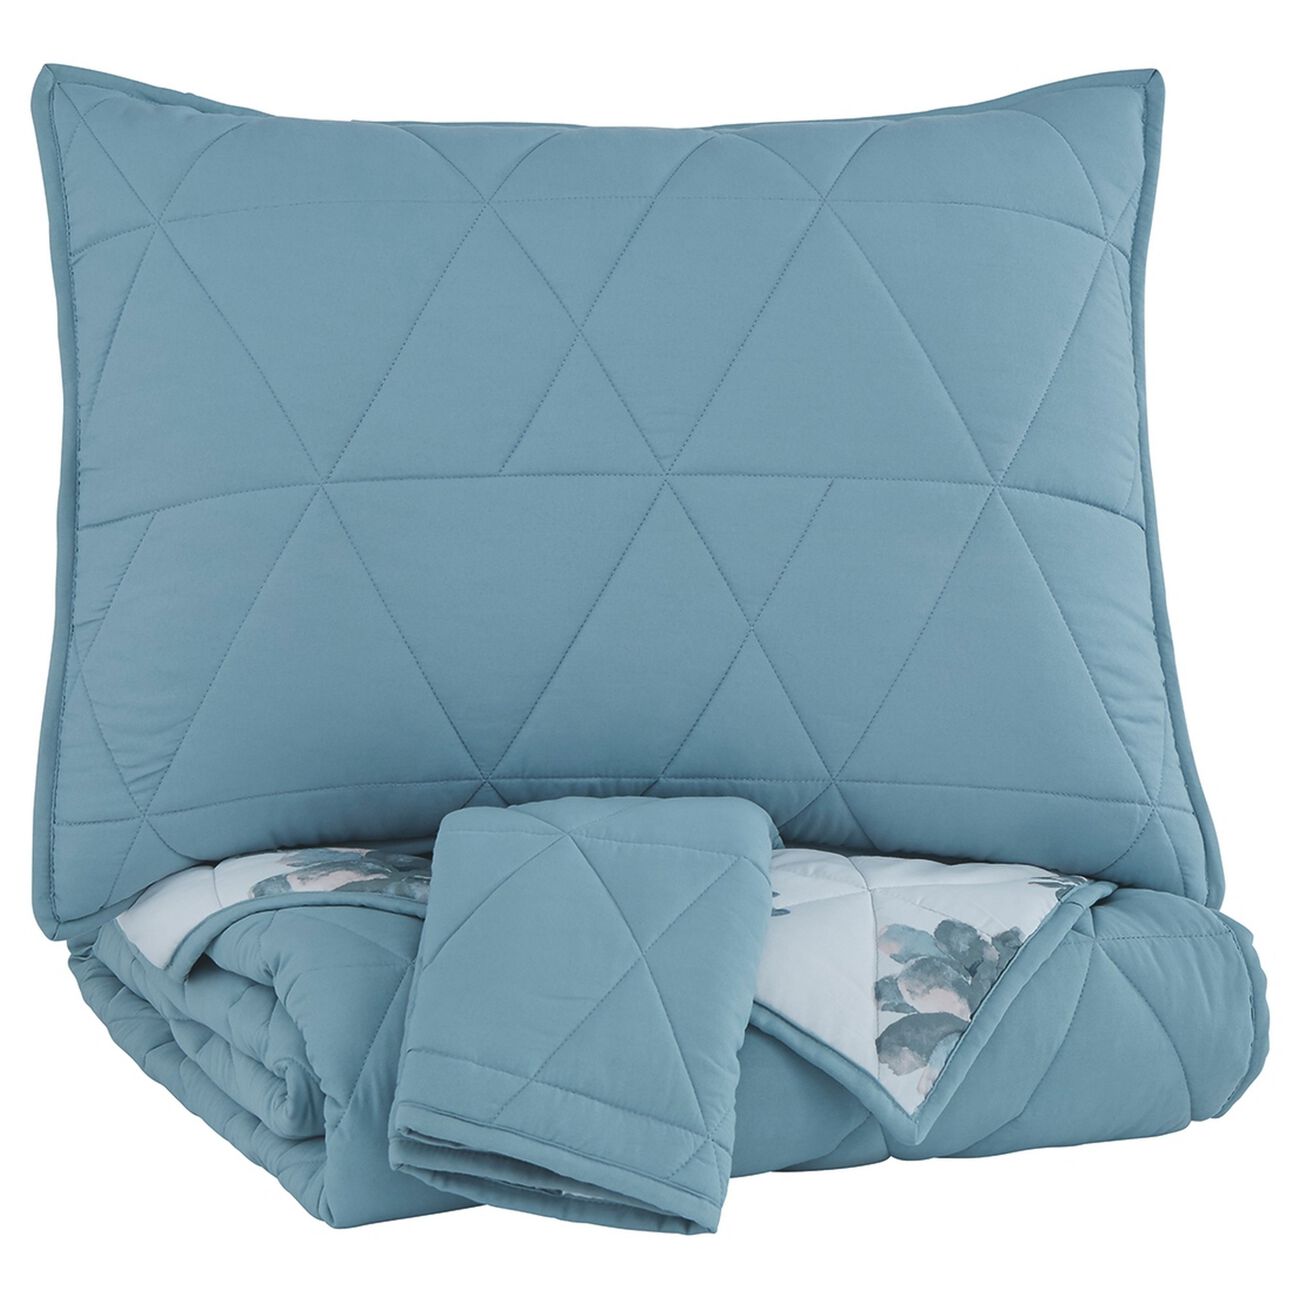 Geometrically stitched Full Size Fabric Comforter set with 2 Shams, Blue